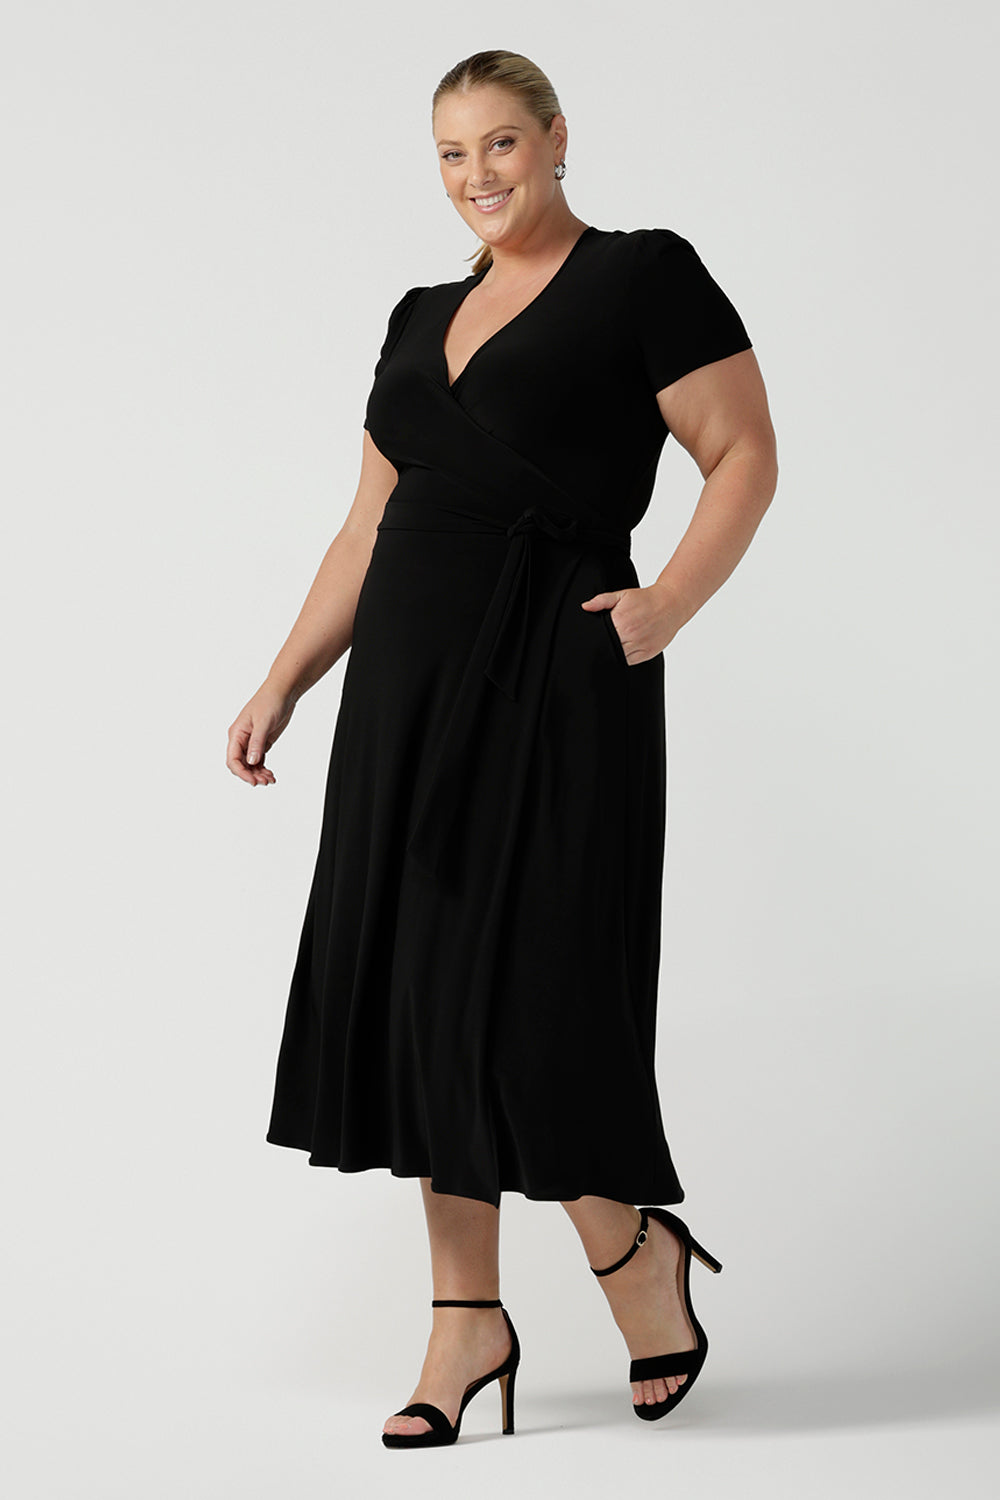 Workwear for curvy women. Plus size 18 jersey wrap dress in size 8. Curvy women workwear midi dress with pockets. Black dress. 